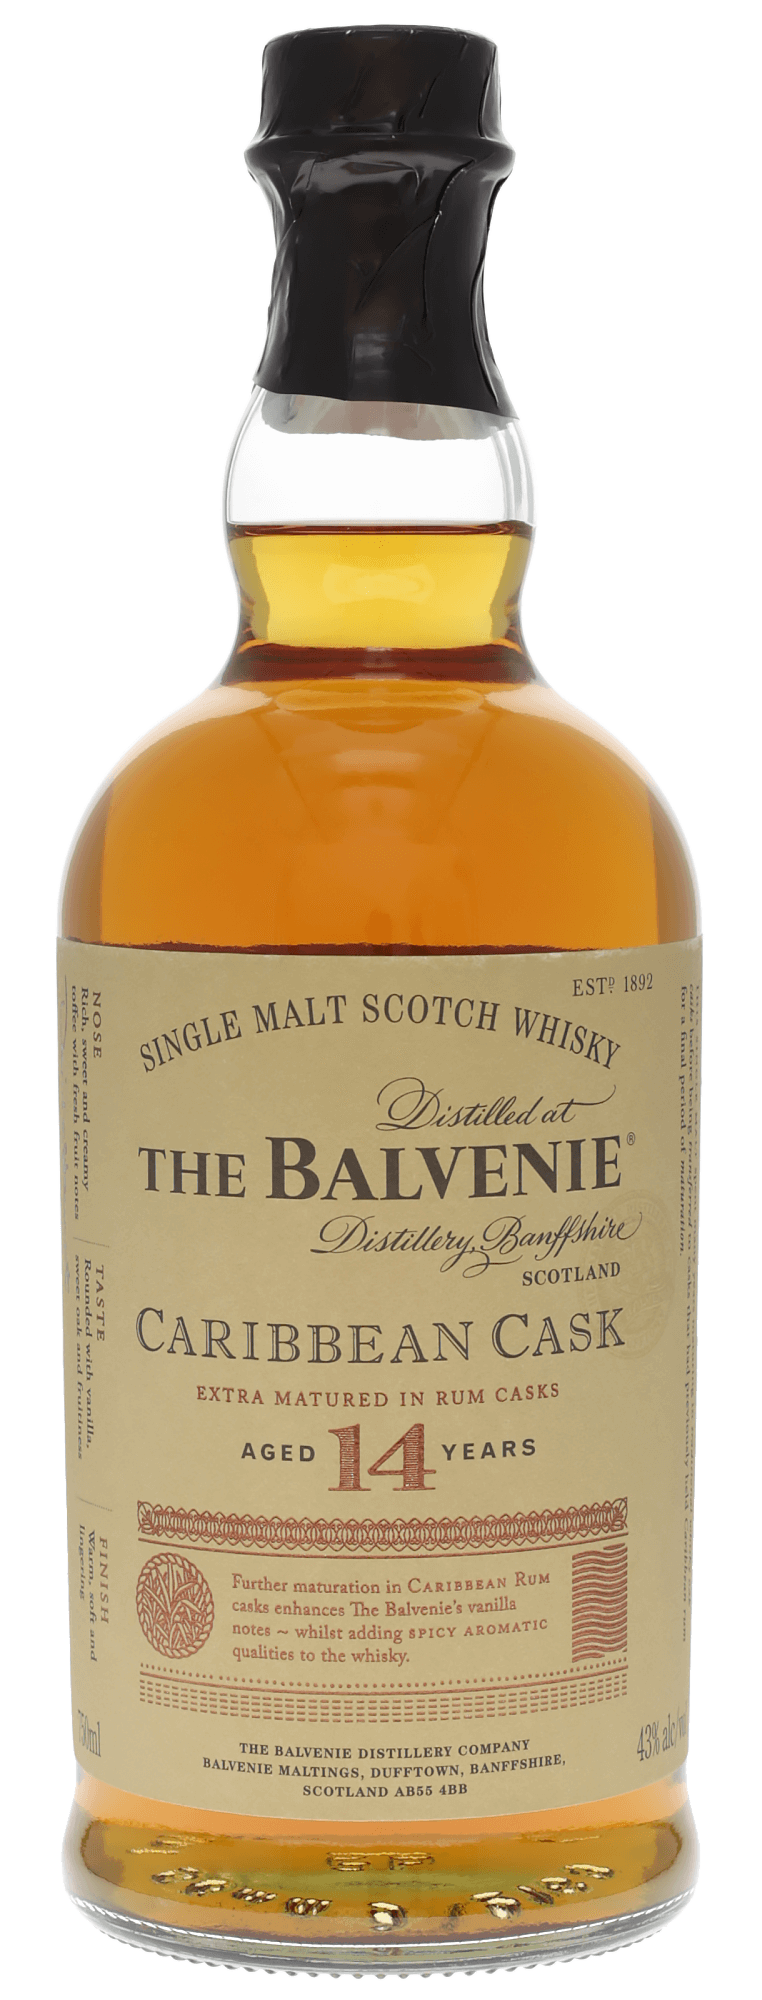 The Balvenie Caribbean Cask 14 Year Old